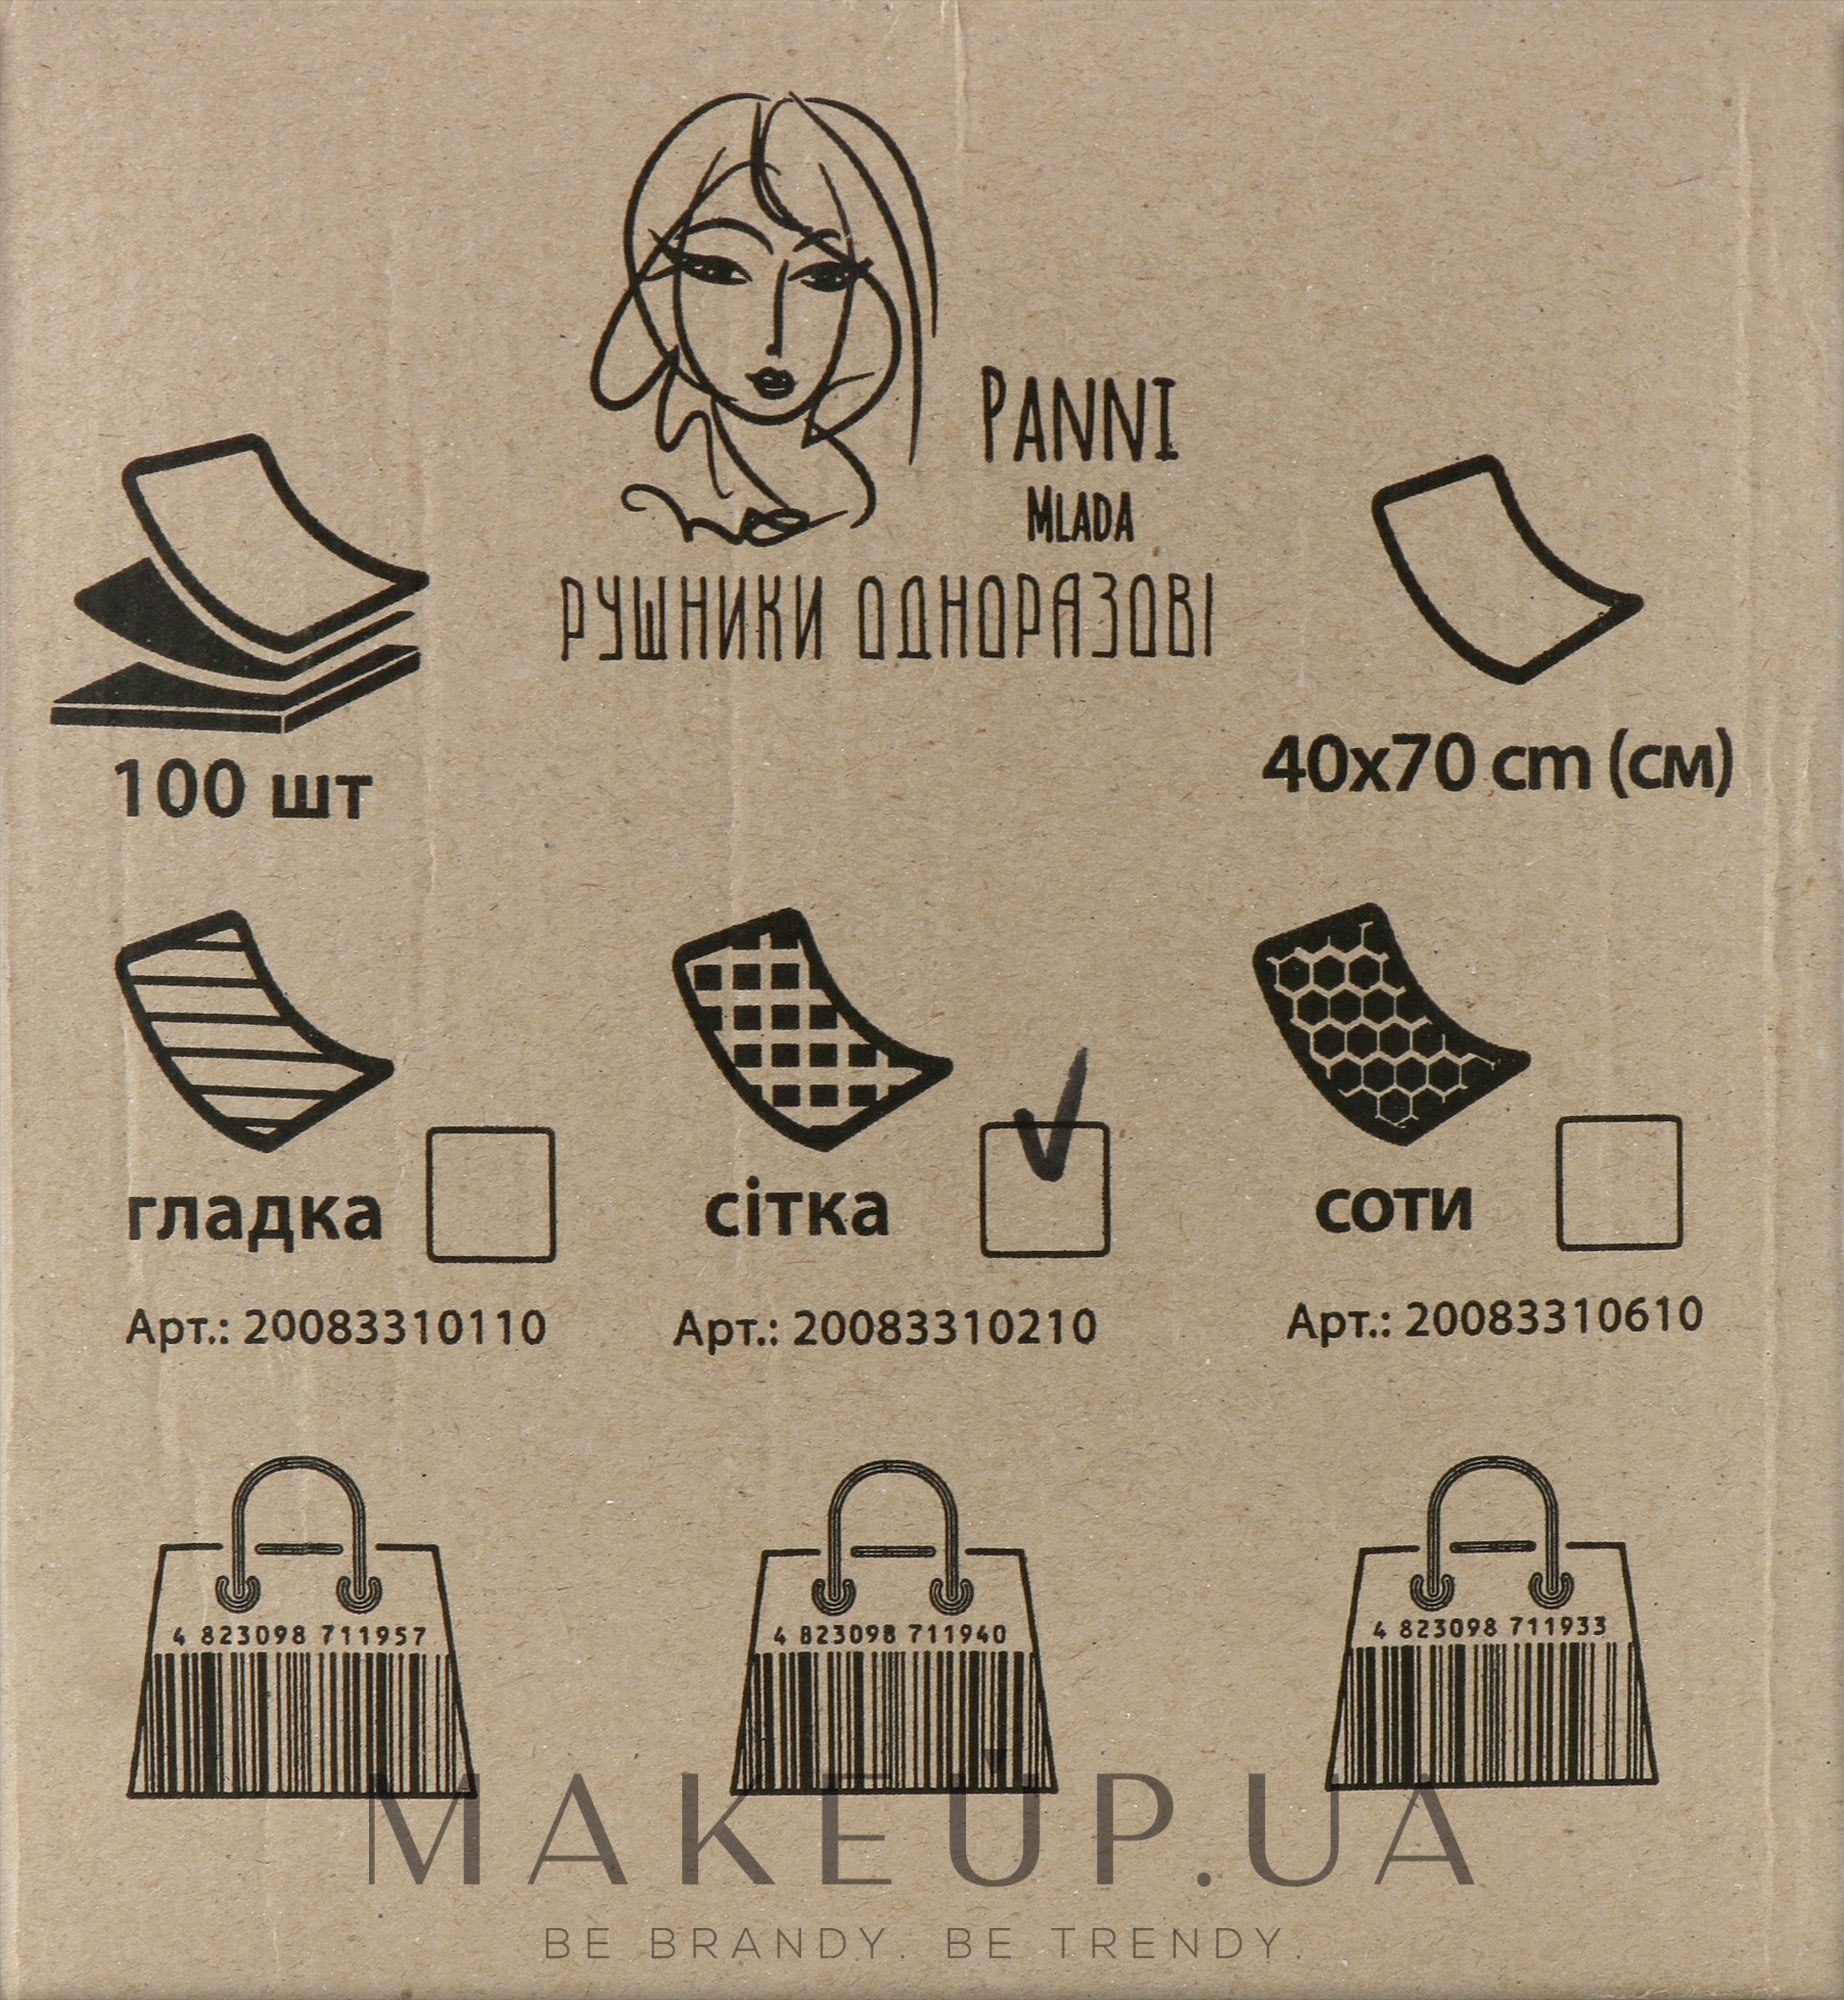 Полотенца из спанлейса 40х70 см в коробках, 45 г/м2, сетка, 100 шт - Panni Mlada — фото 100шт